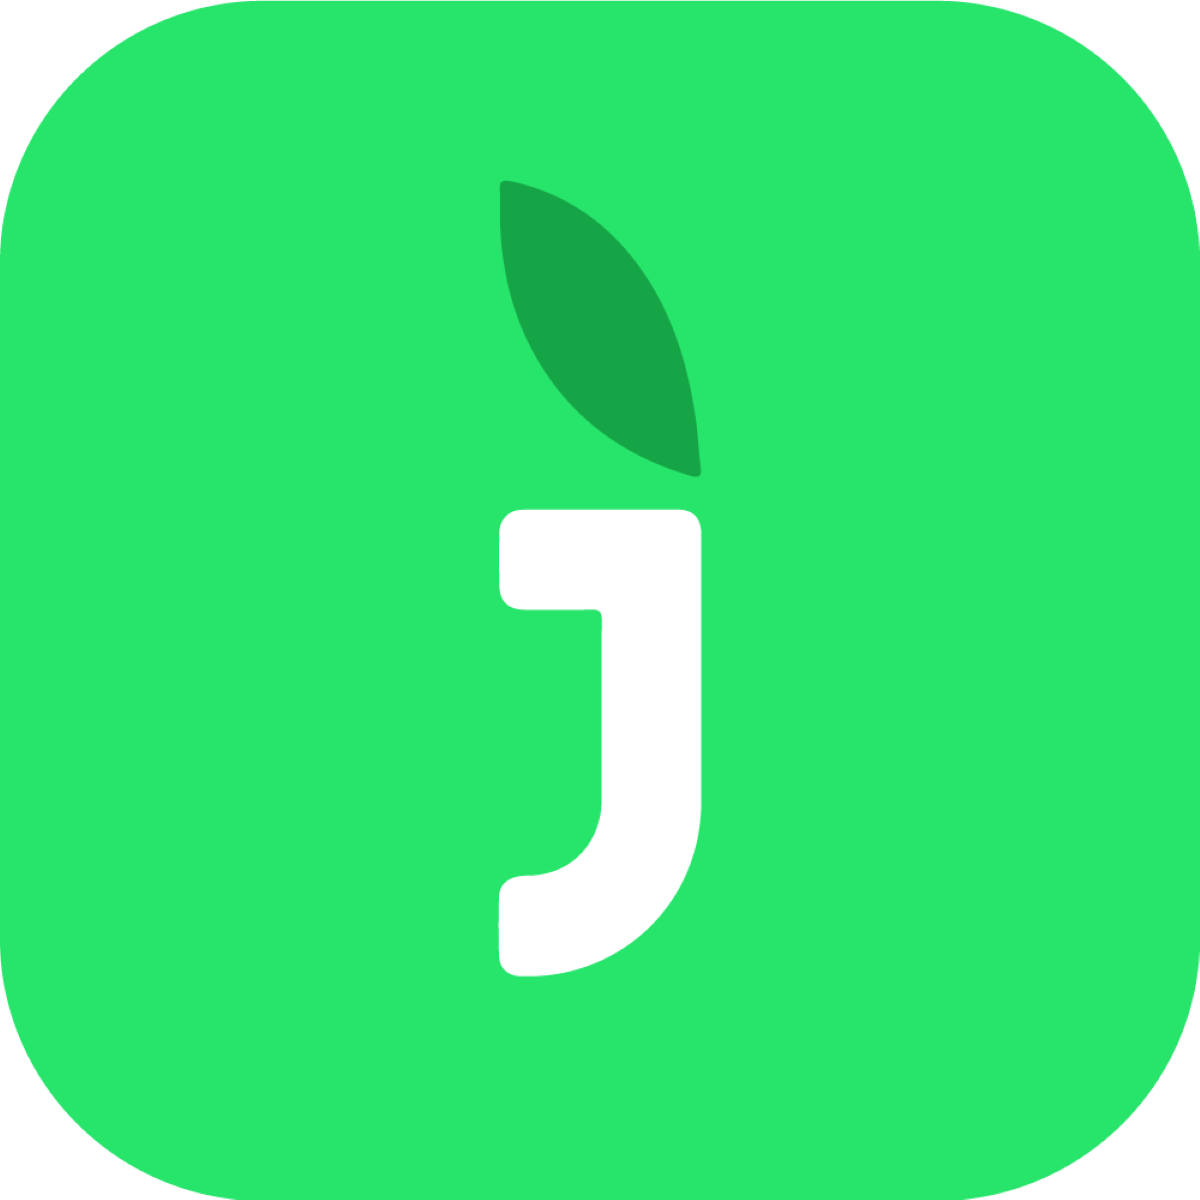 JivoChat